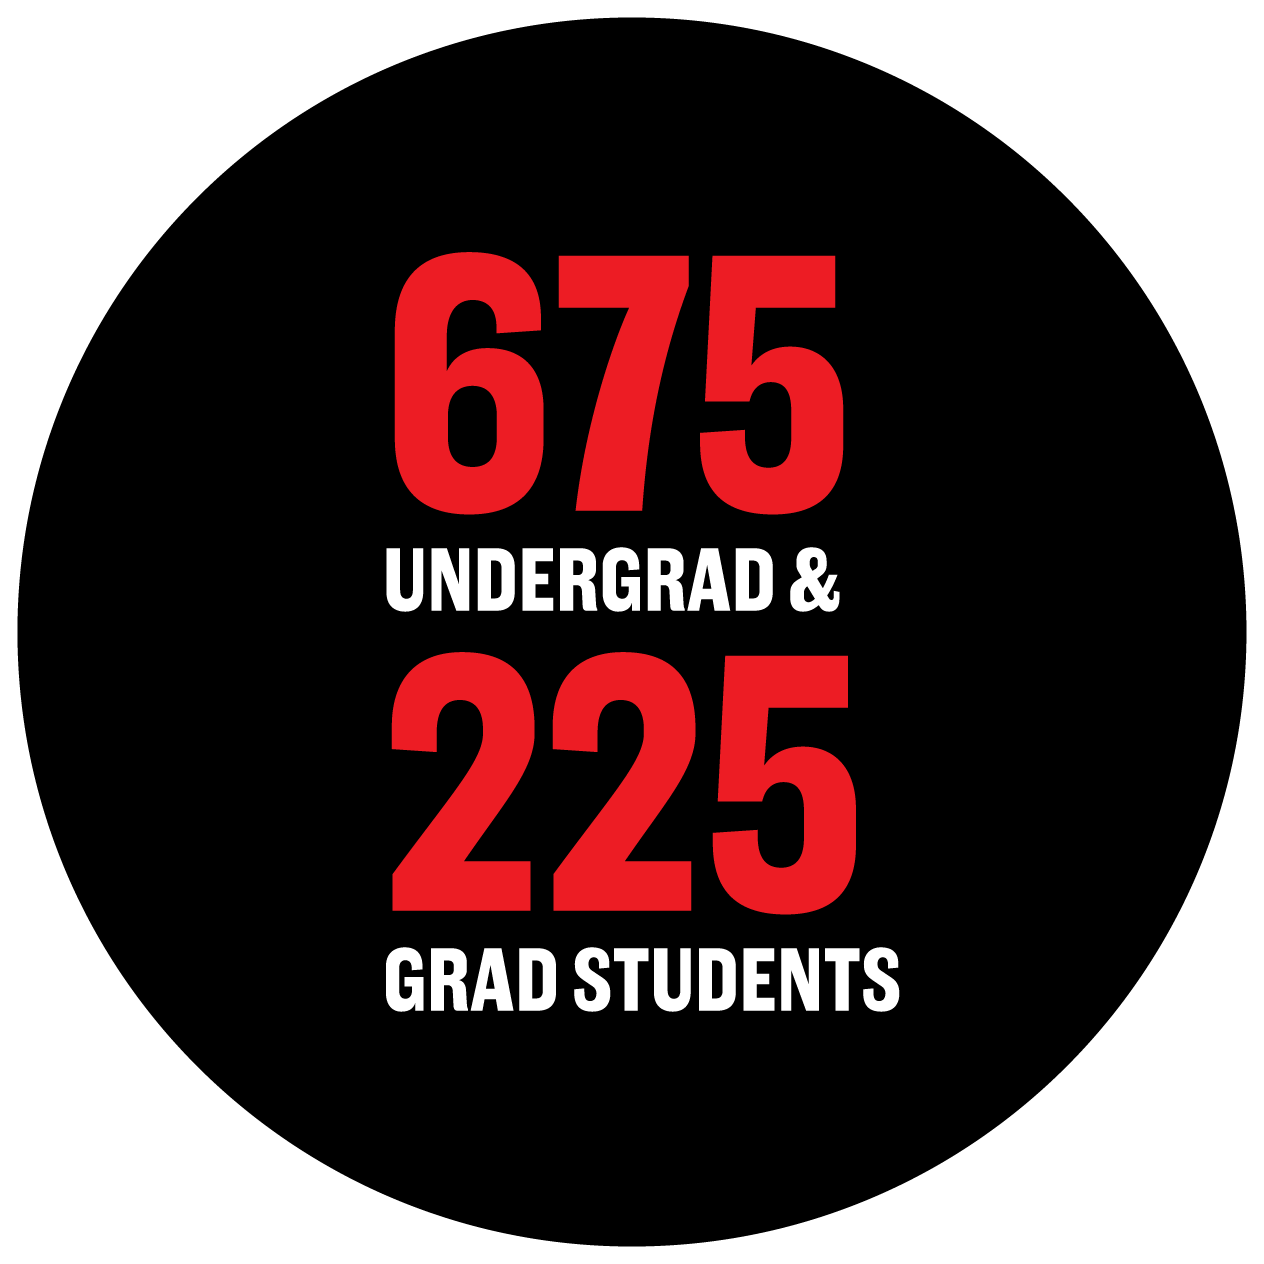 675 undergrad & 225 grad students.